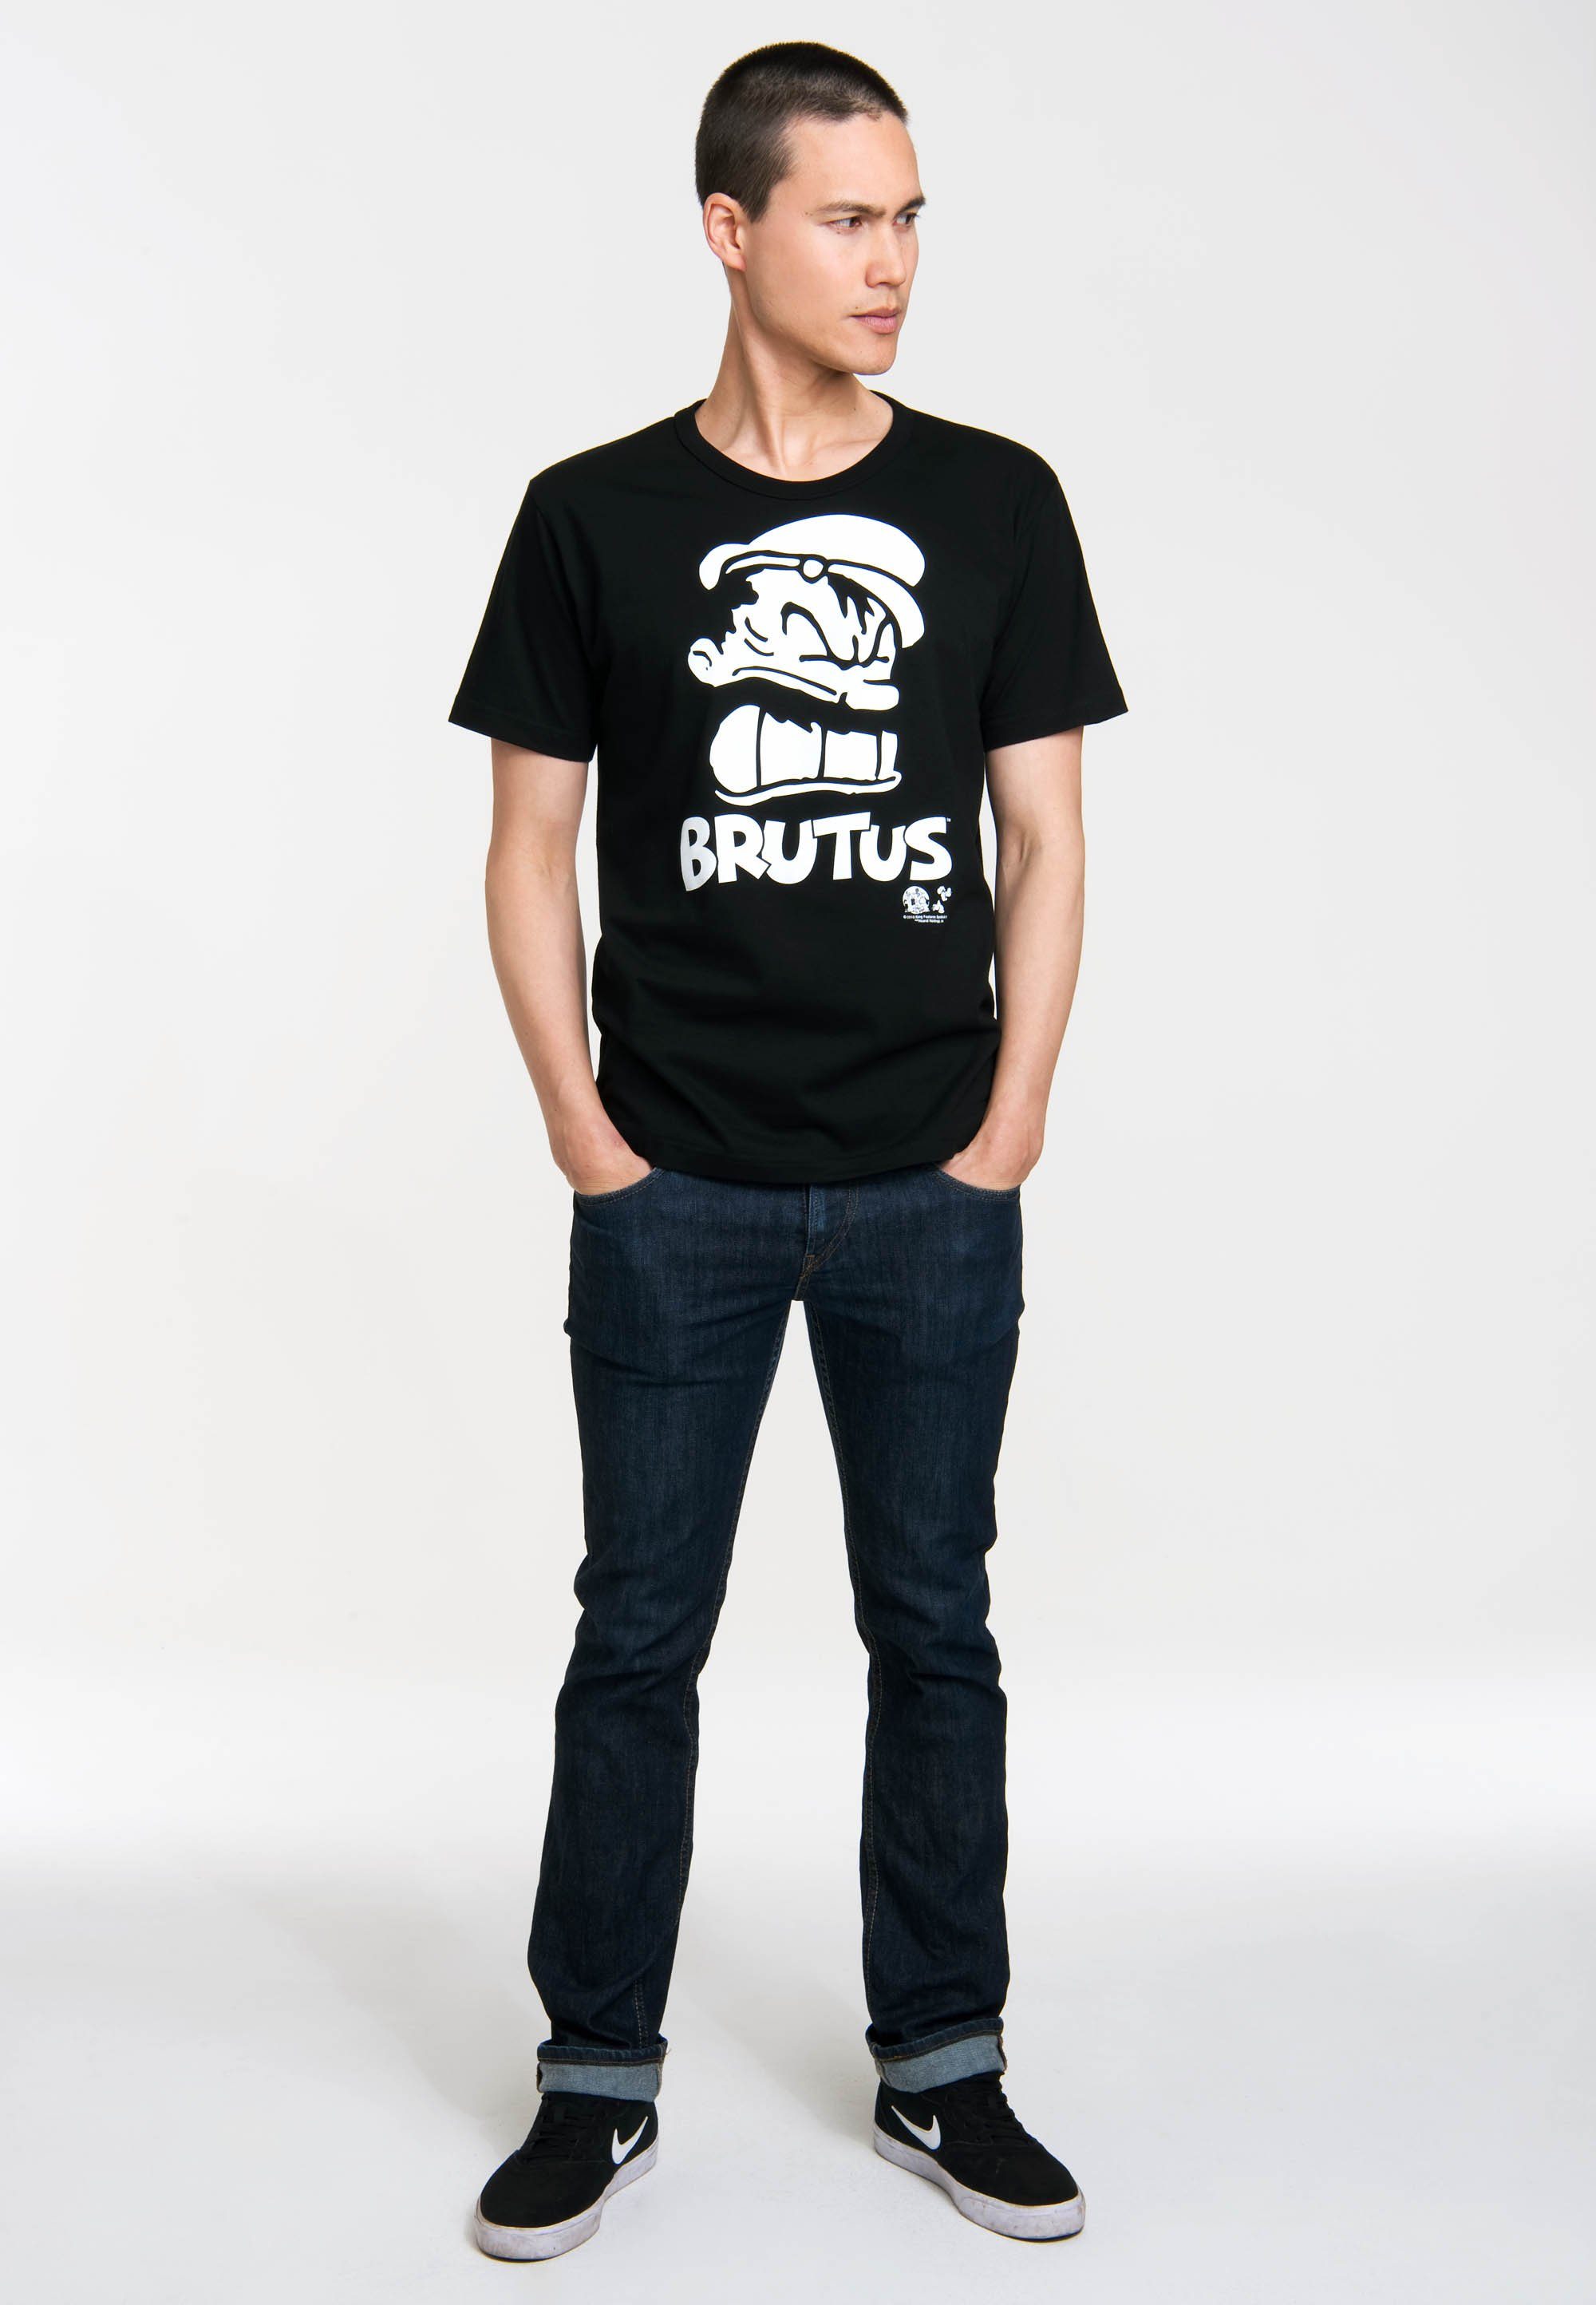 LOGOSHIRT T-Shirt Popeye - Brutus Portrait mit Brutus-Frontprint